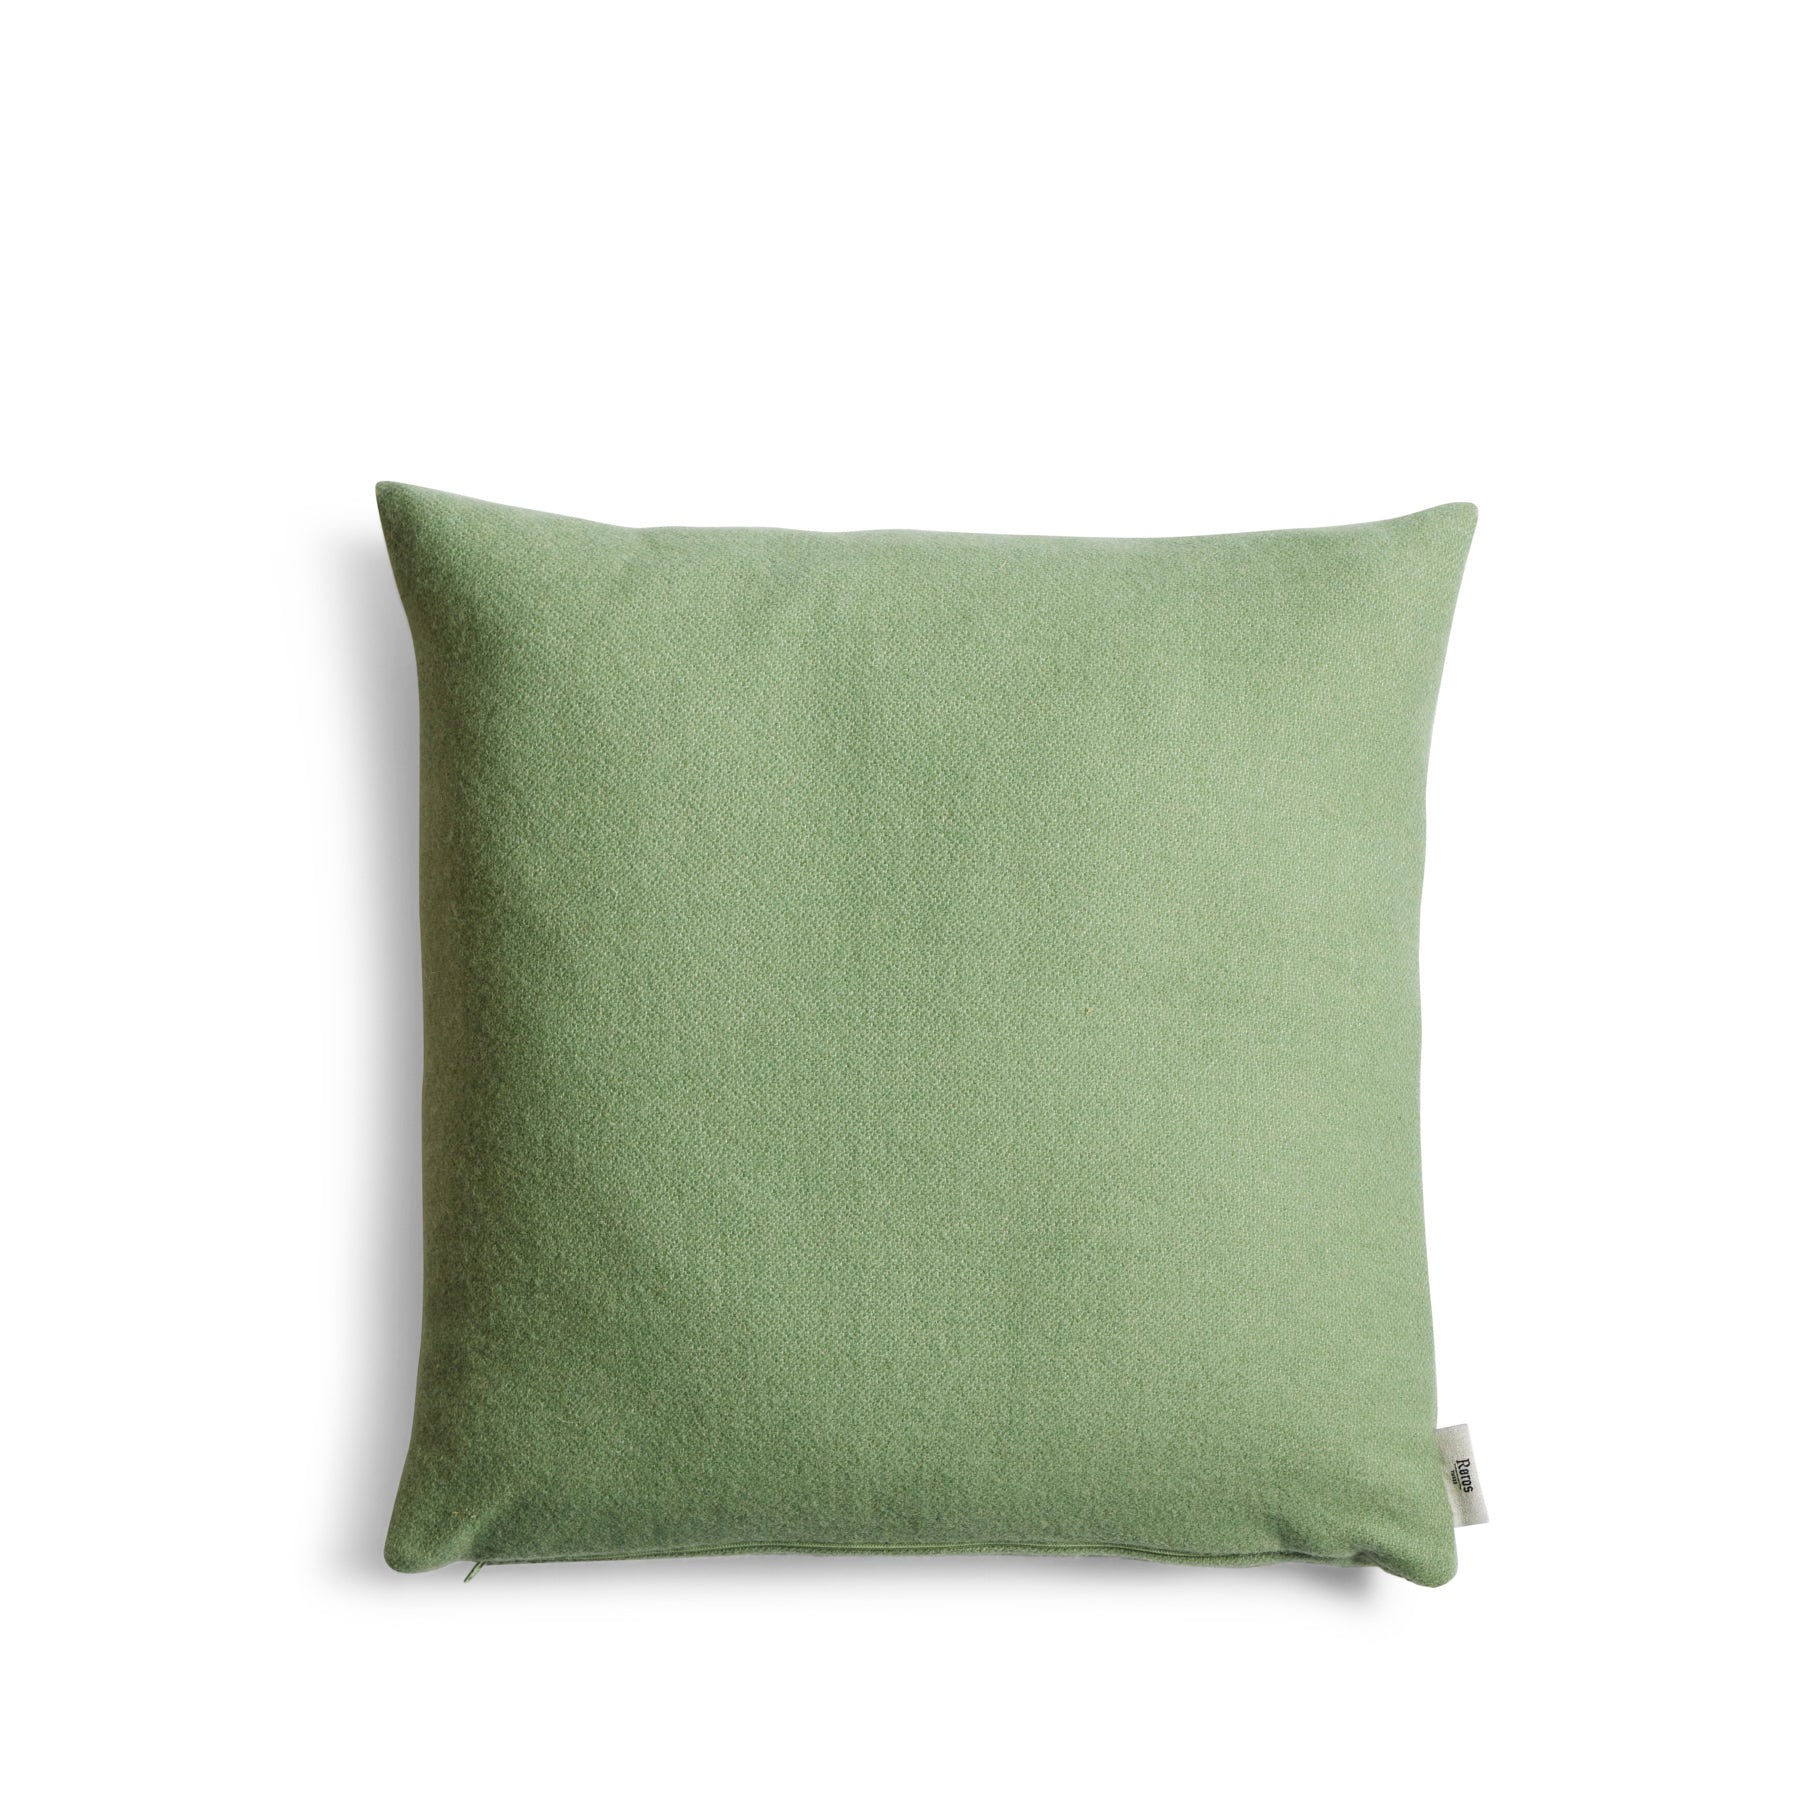 Stemor Pillow in Misty Green Zoom Image 1